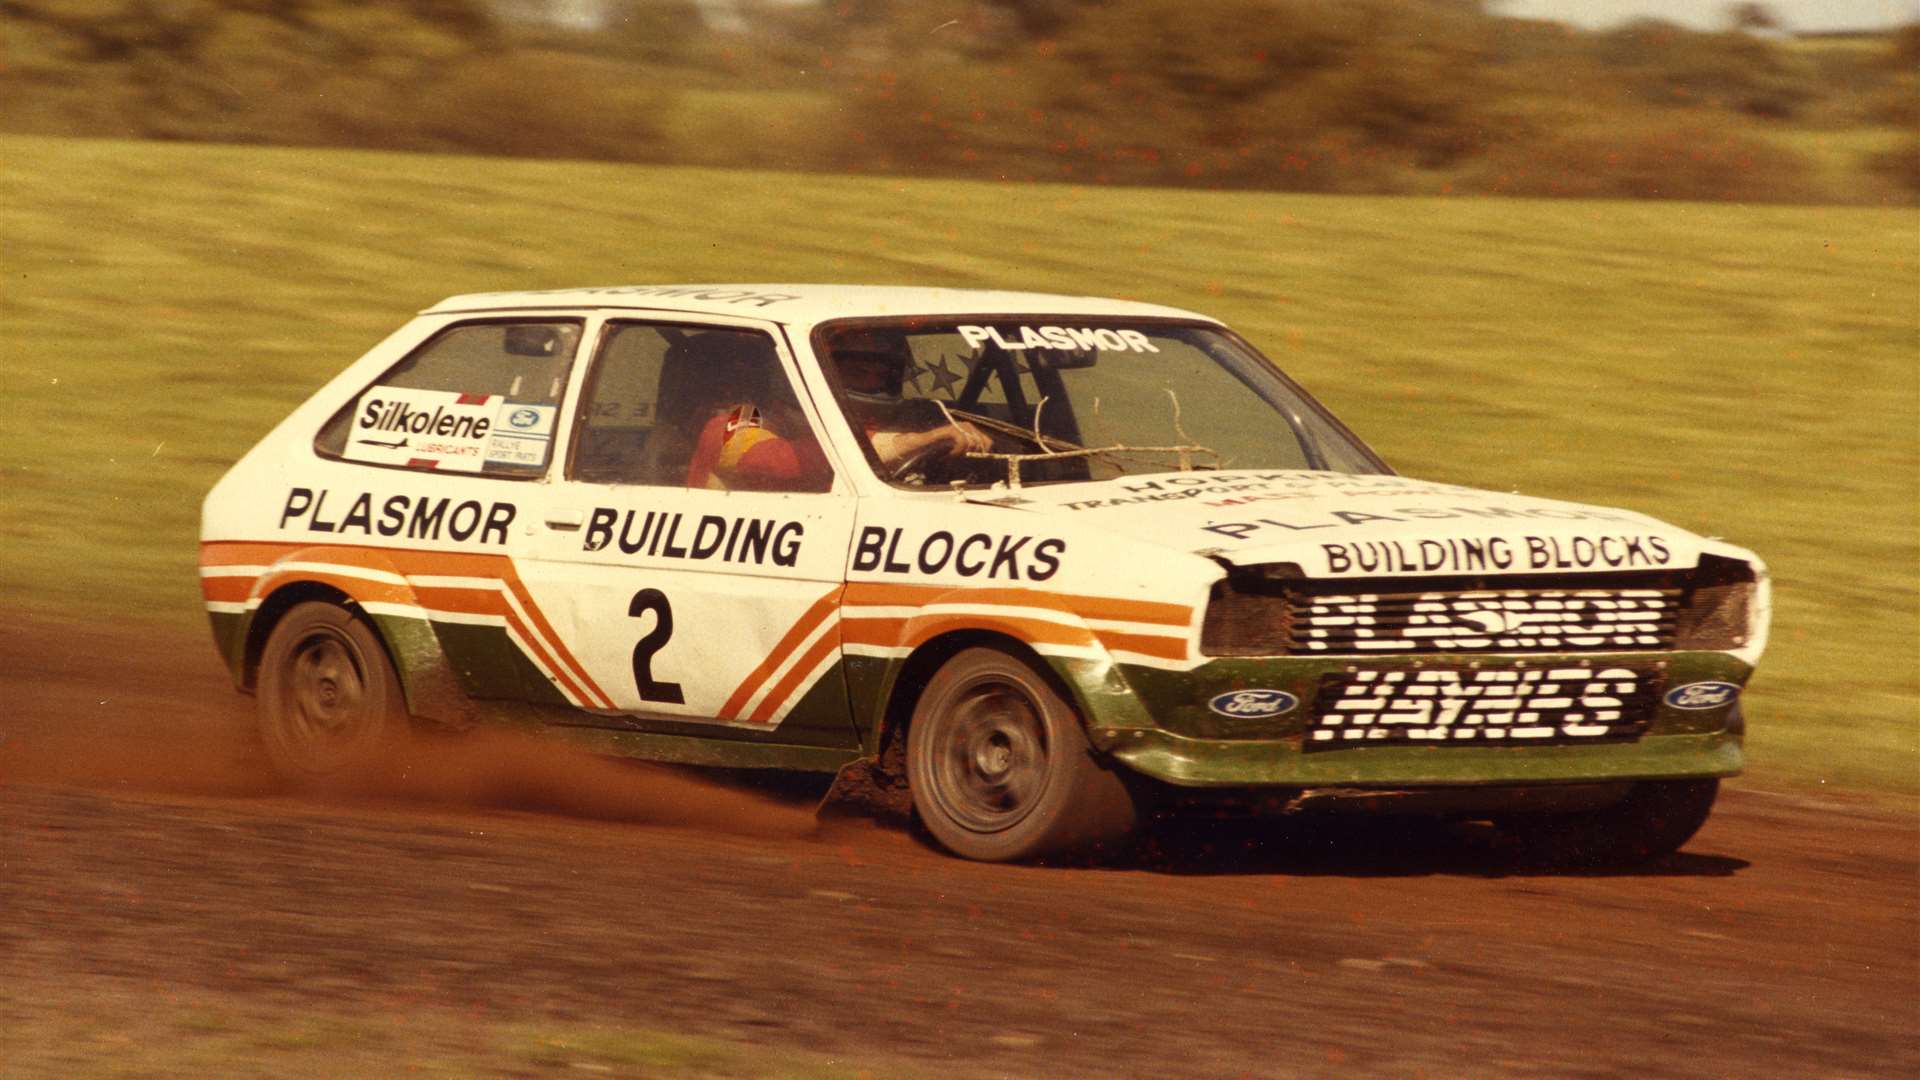 Trevor Hopkins in action at Swindon in August 1985. Picture: RallycrossWorld.com